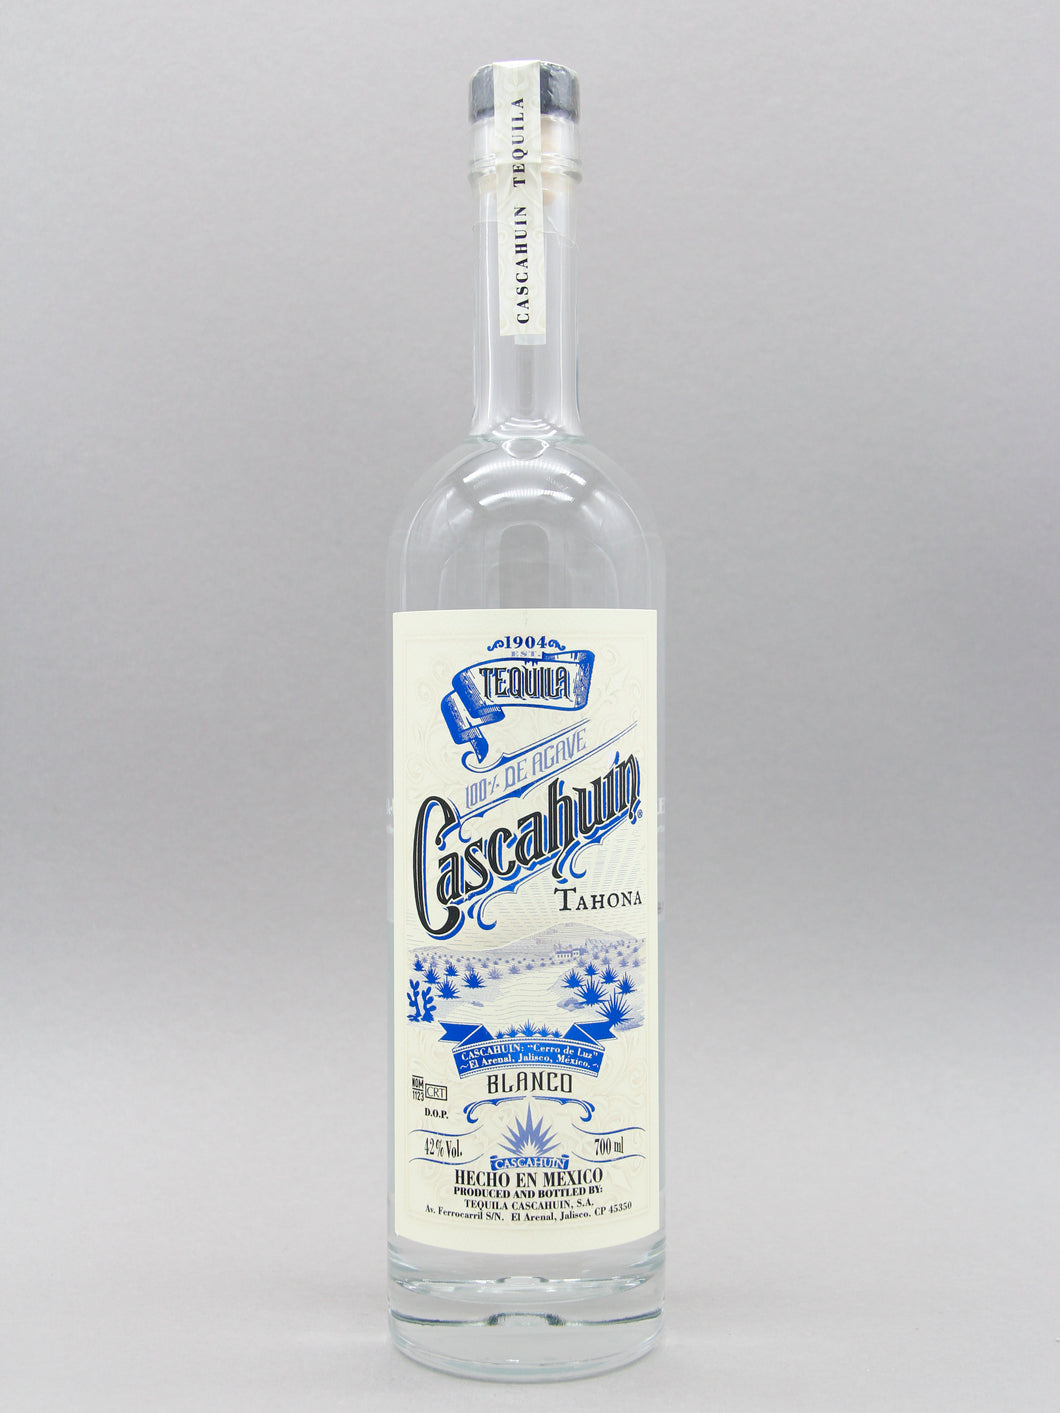 Cascahuin Tequila, Tahona Blanco, 100% De Agave (42%, 70cl)